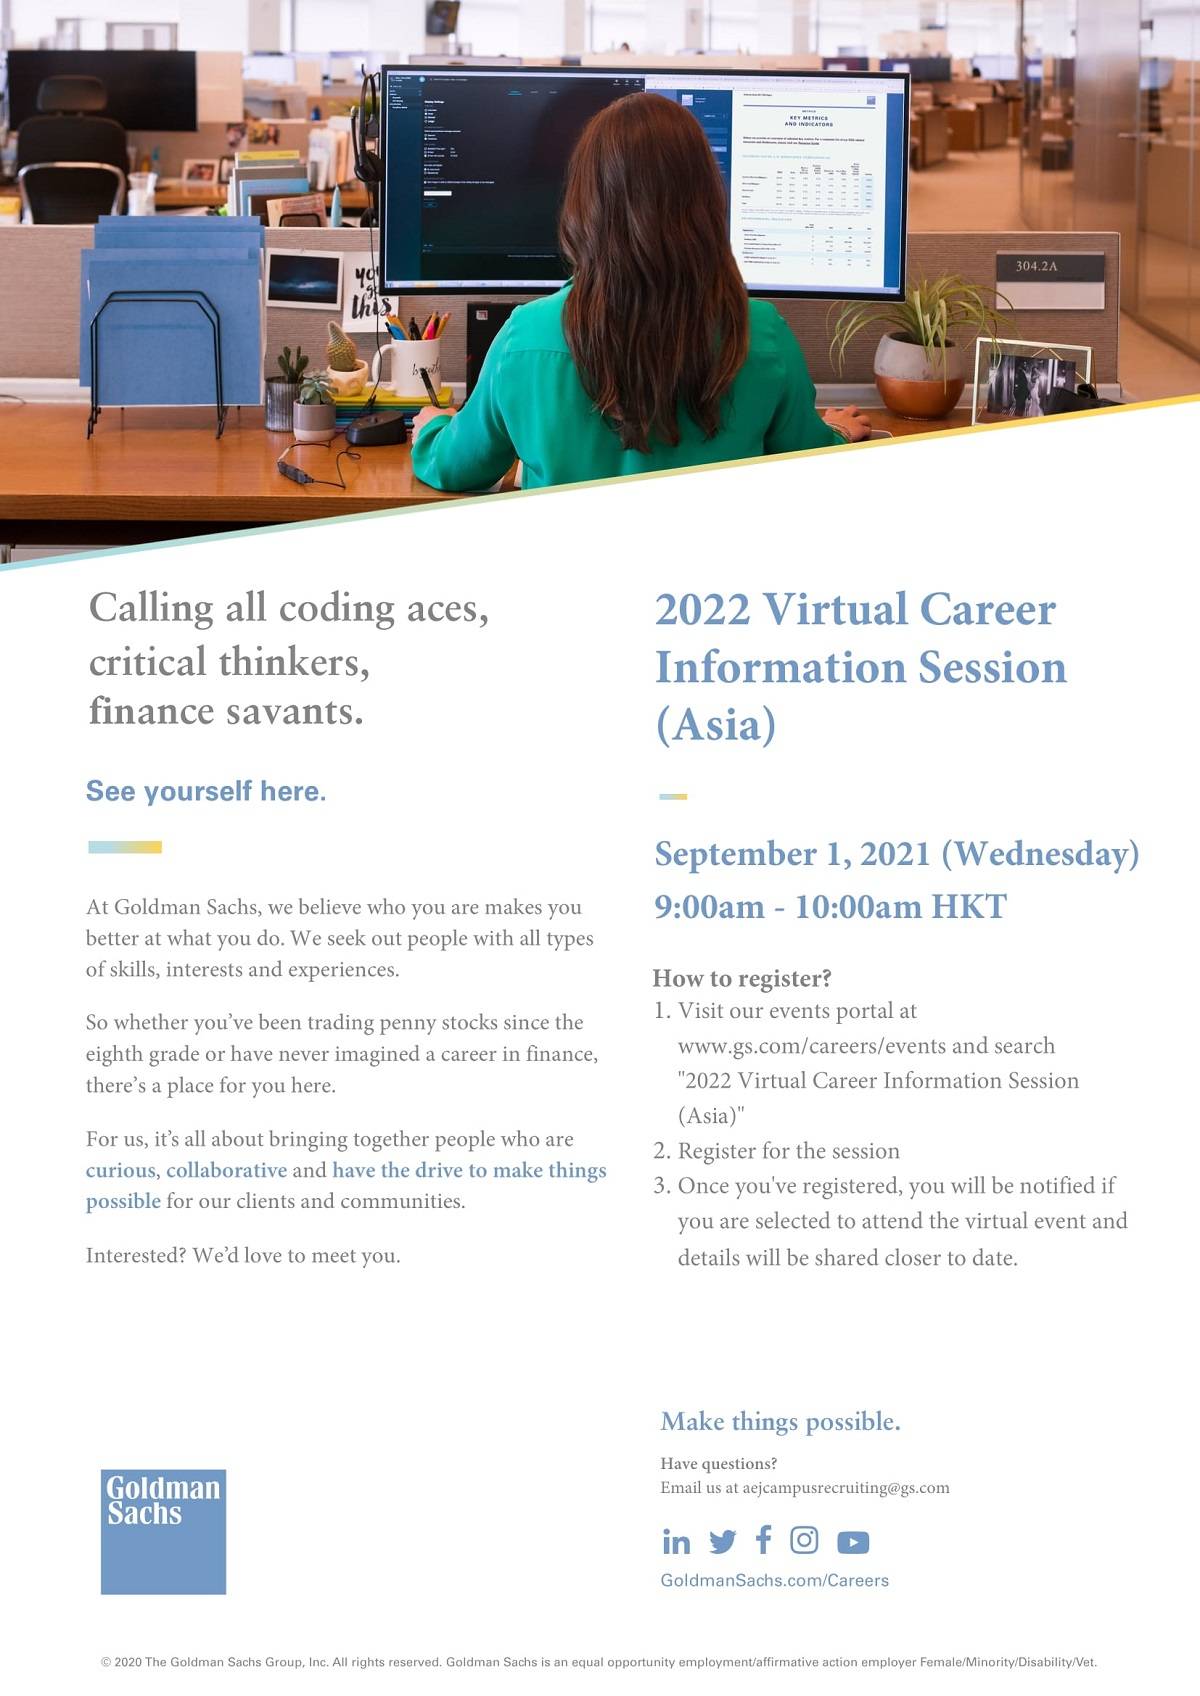 Goldman Sachs 2022 Virtual Career Information Session NUS Centre for